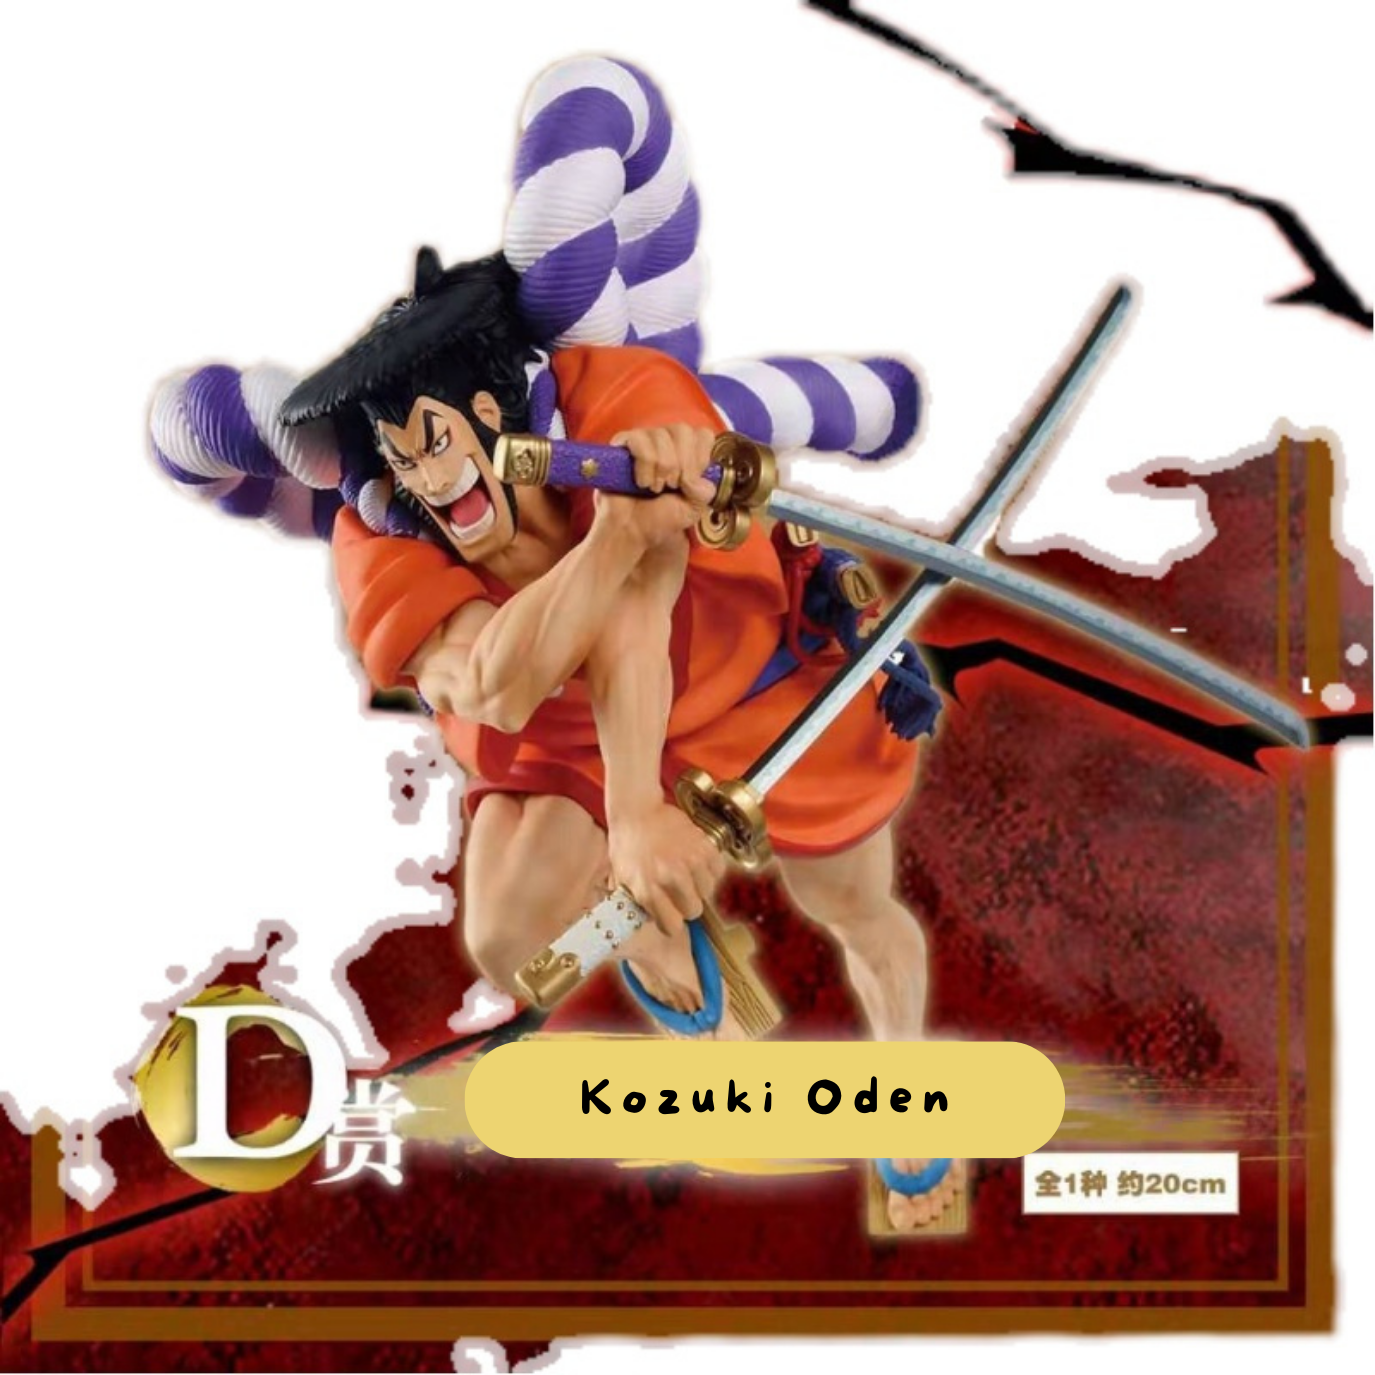 【Online】Ichiban Kuji x One Piece Legend Over Time Edward Newgate Kuji Tickets